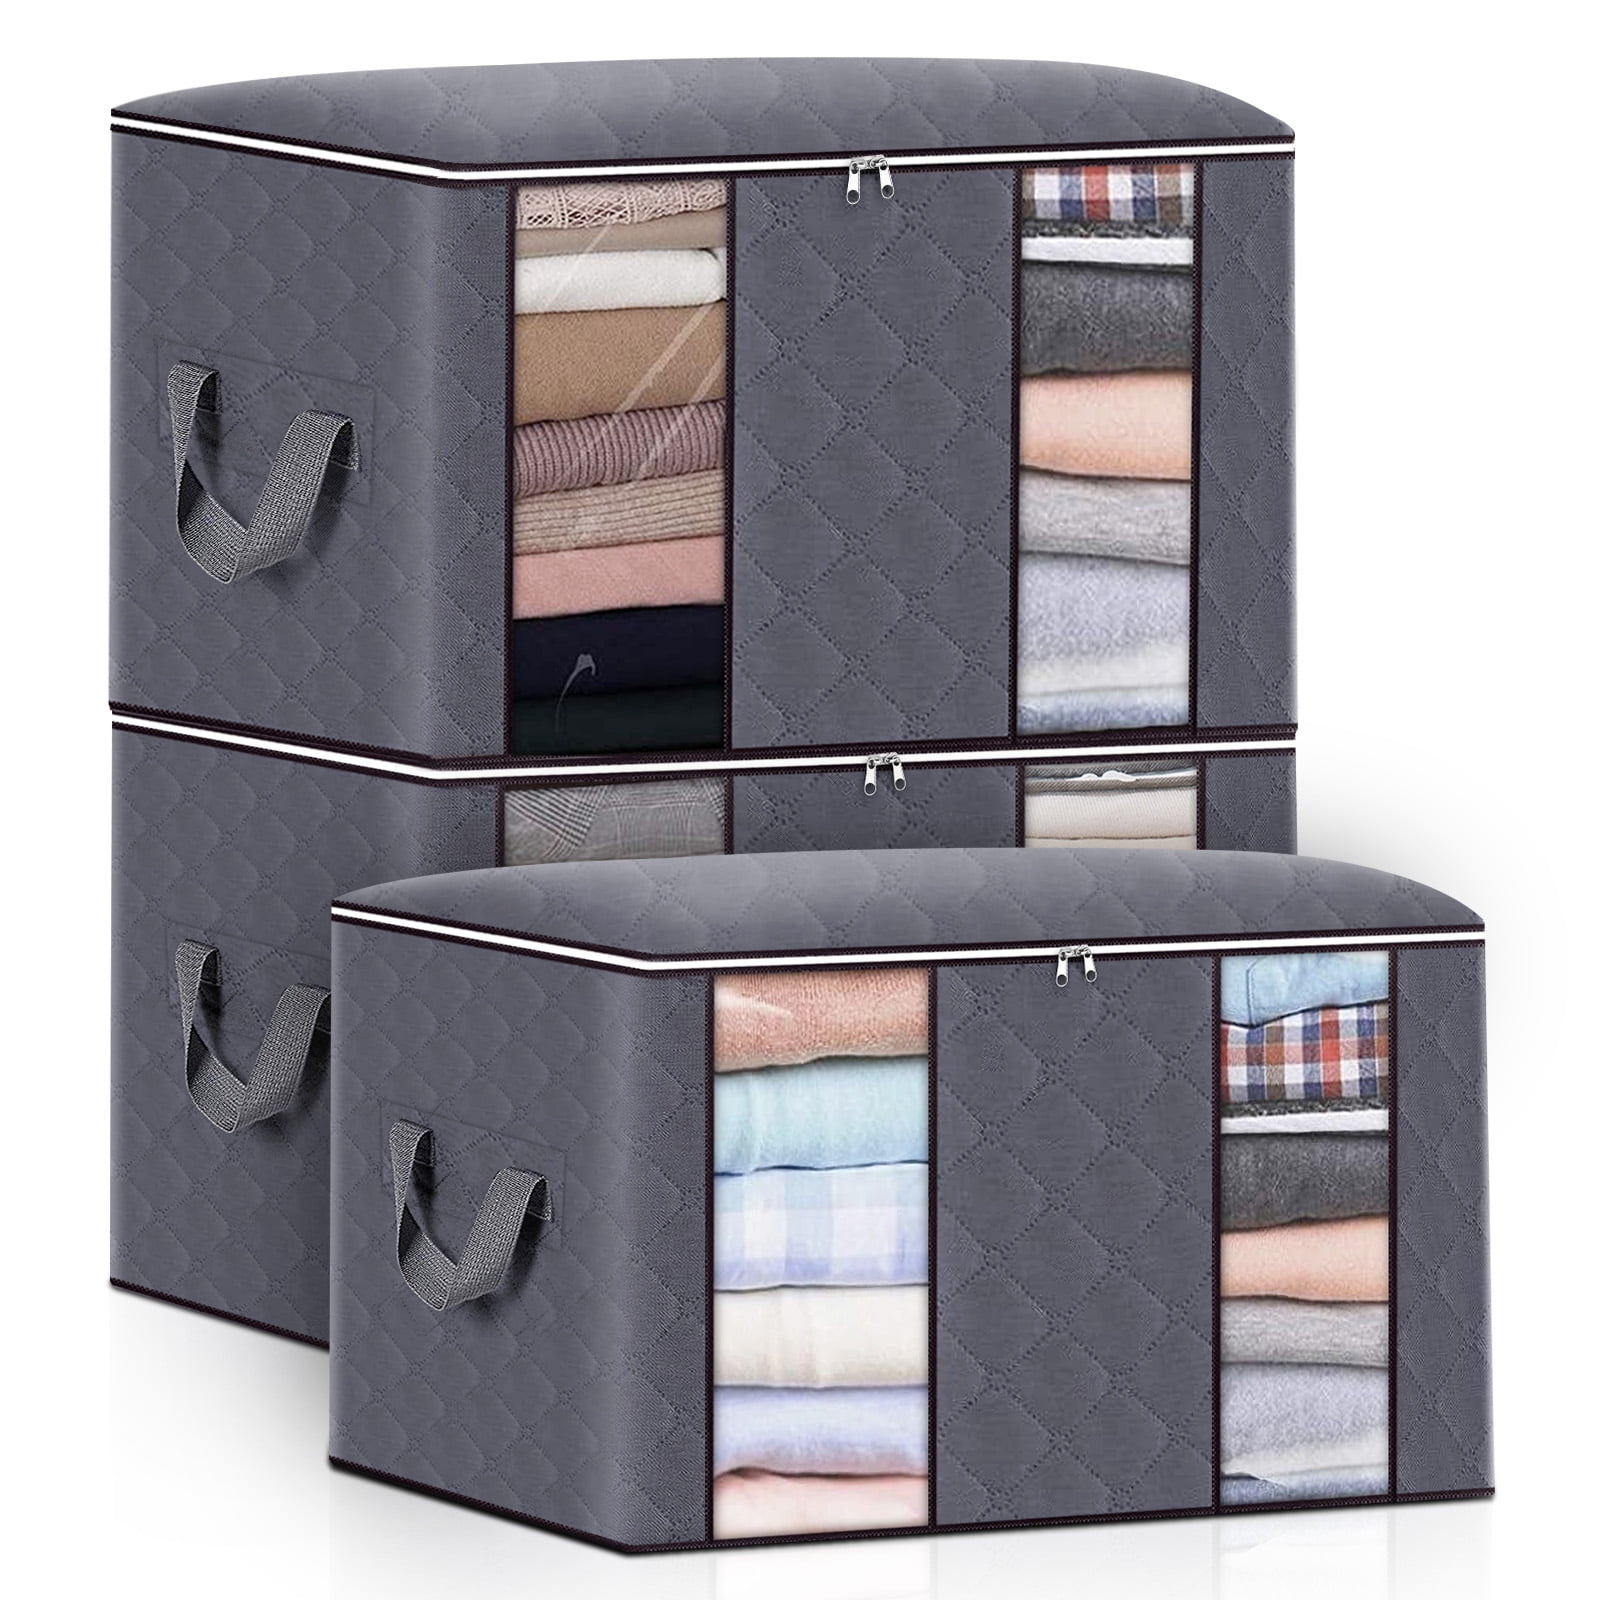 homyfort Dresser Drawer Organizer Dividers Clothes Foldable Storage Bins Cubes 